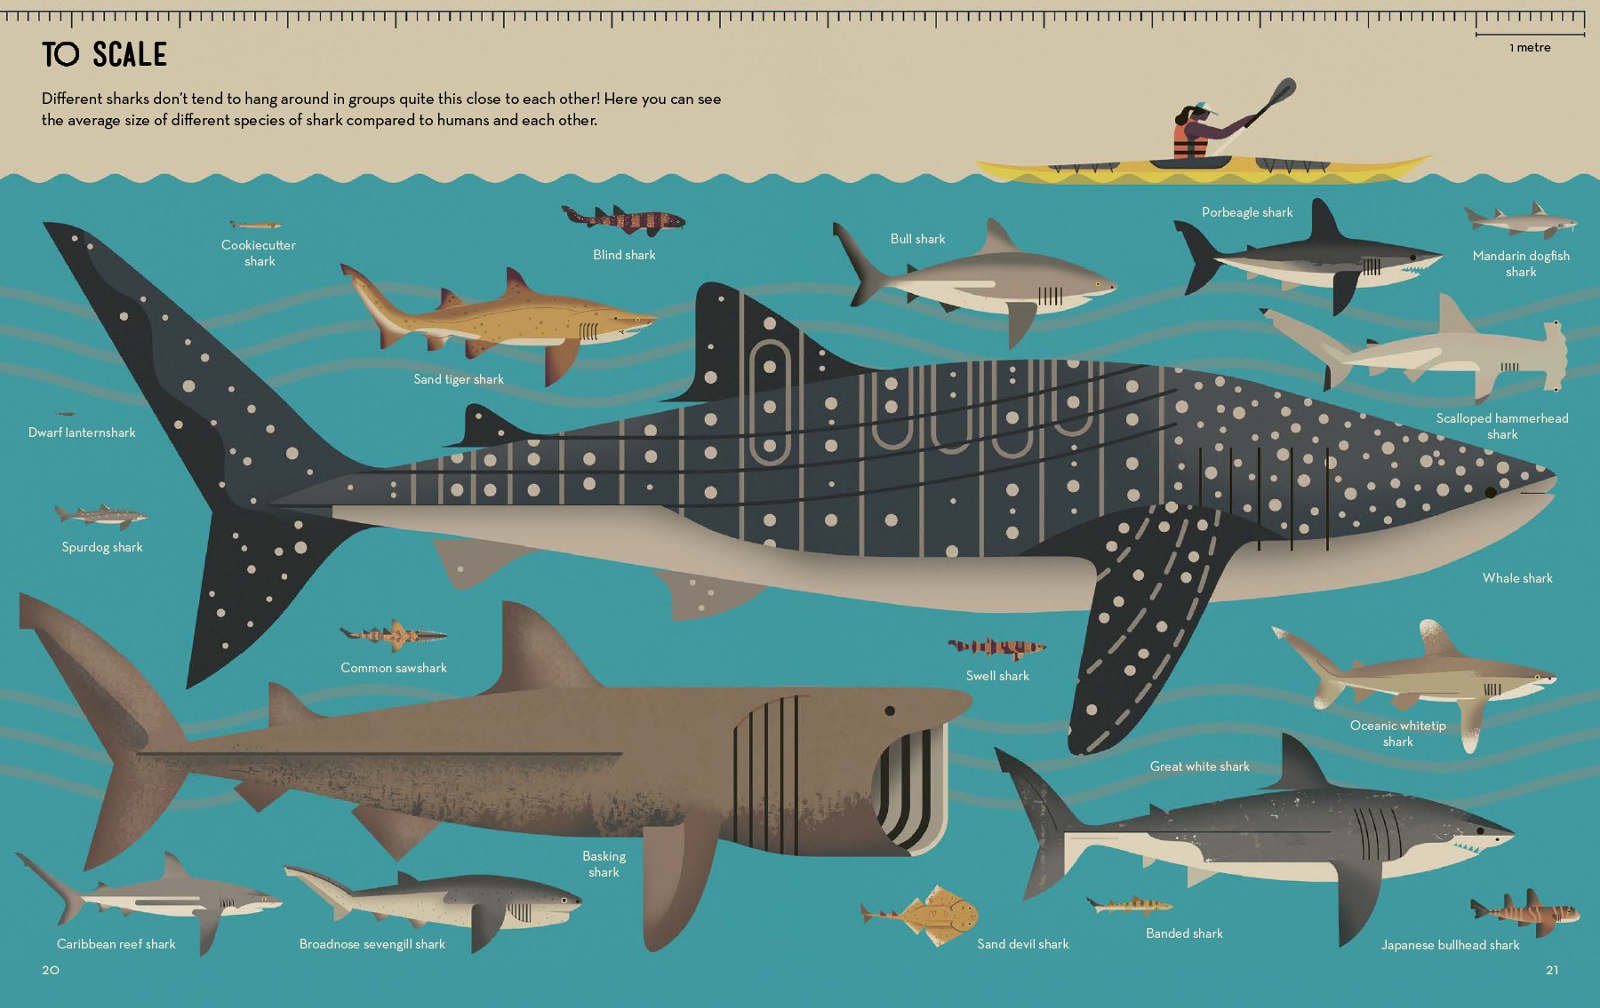 11-Smart-About-Sharks-Owen-Davey-Whale-Kayak-Scale_1600_c.jpg